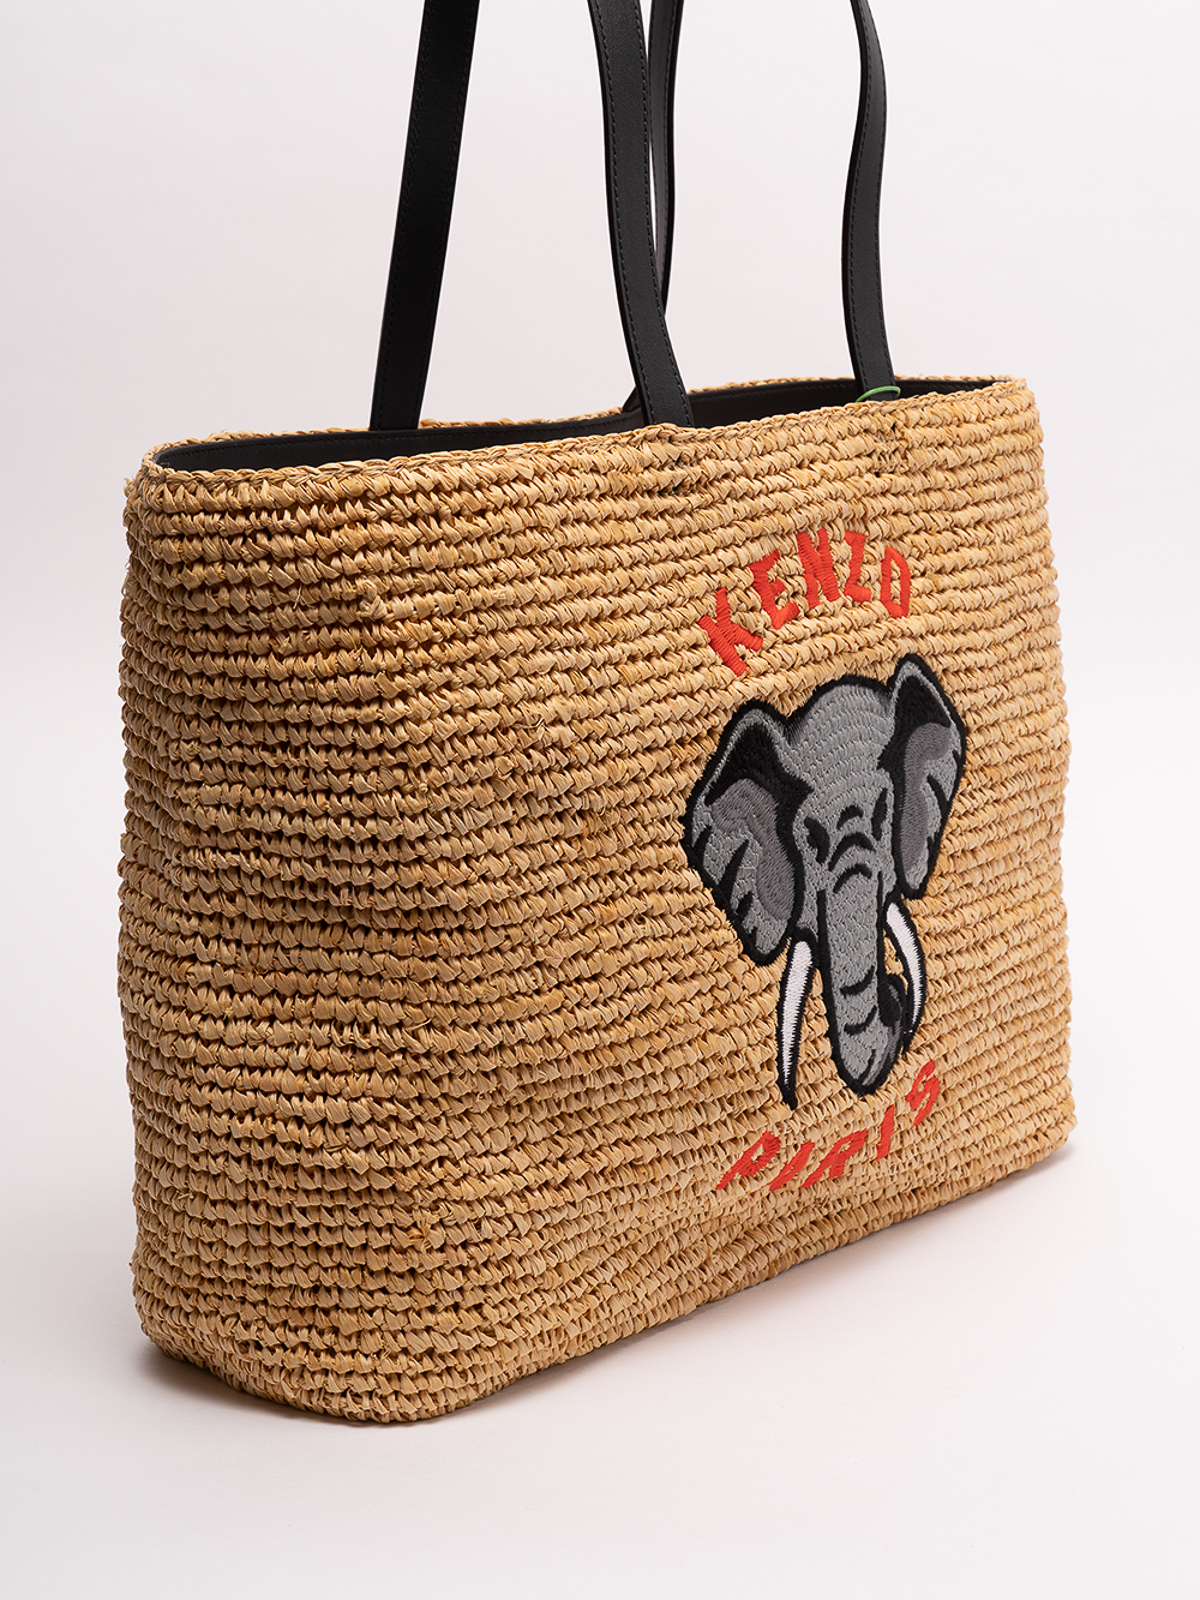 Totes bags Kenzo - Raffia tote - FD52SA561F0299A | Shop online at 